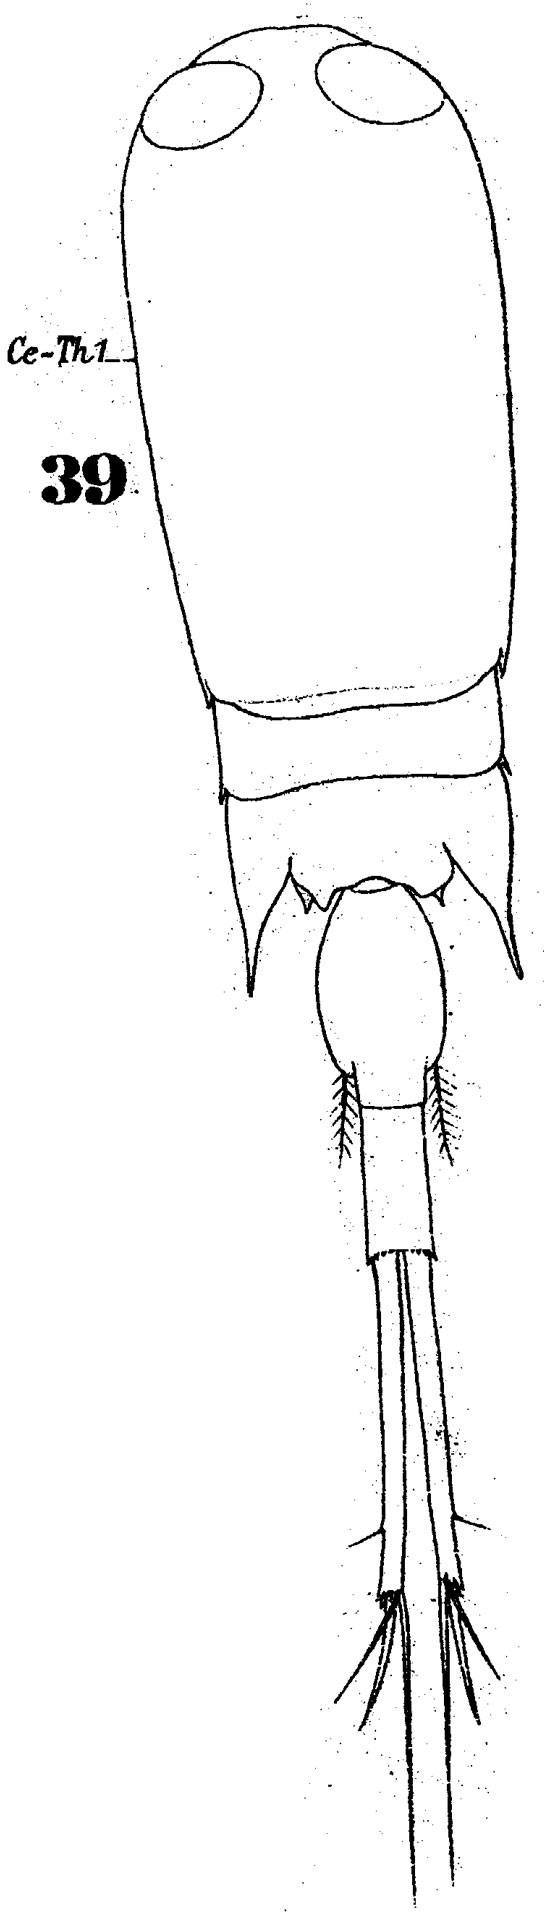 Espce Corycaeus (Corycaeus) speciosus - Planche 6 de figures morphologiques